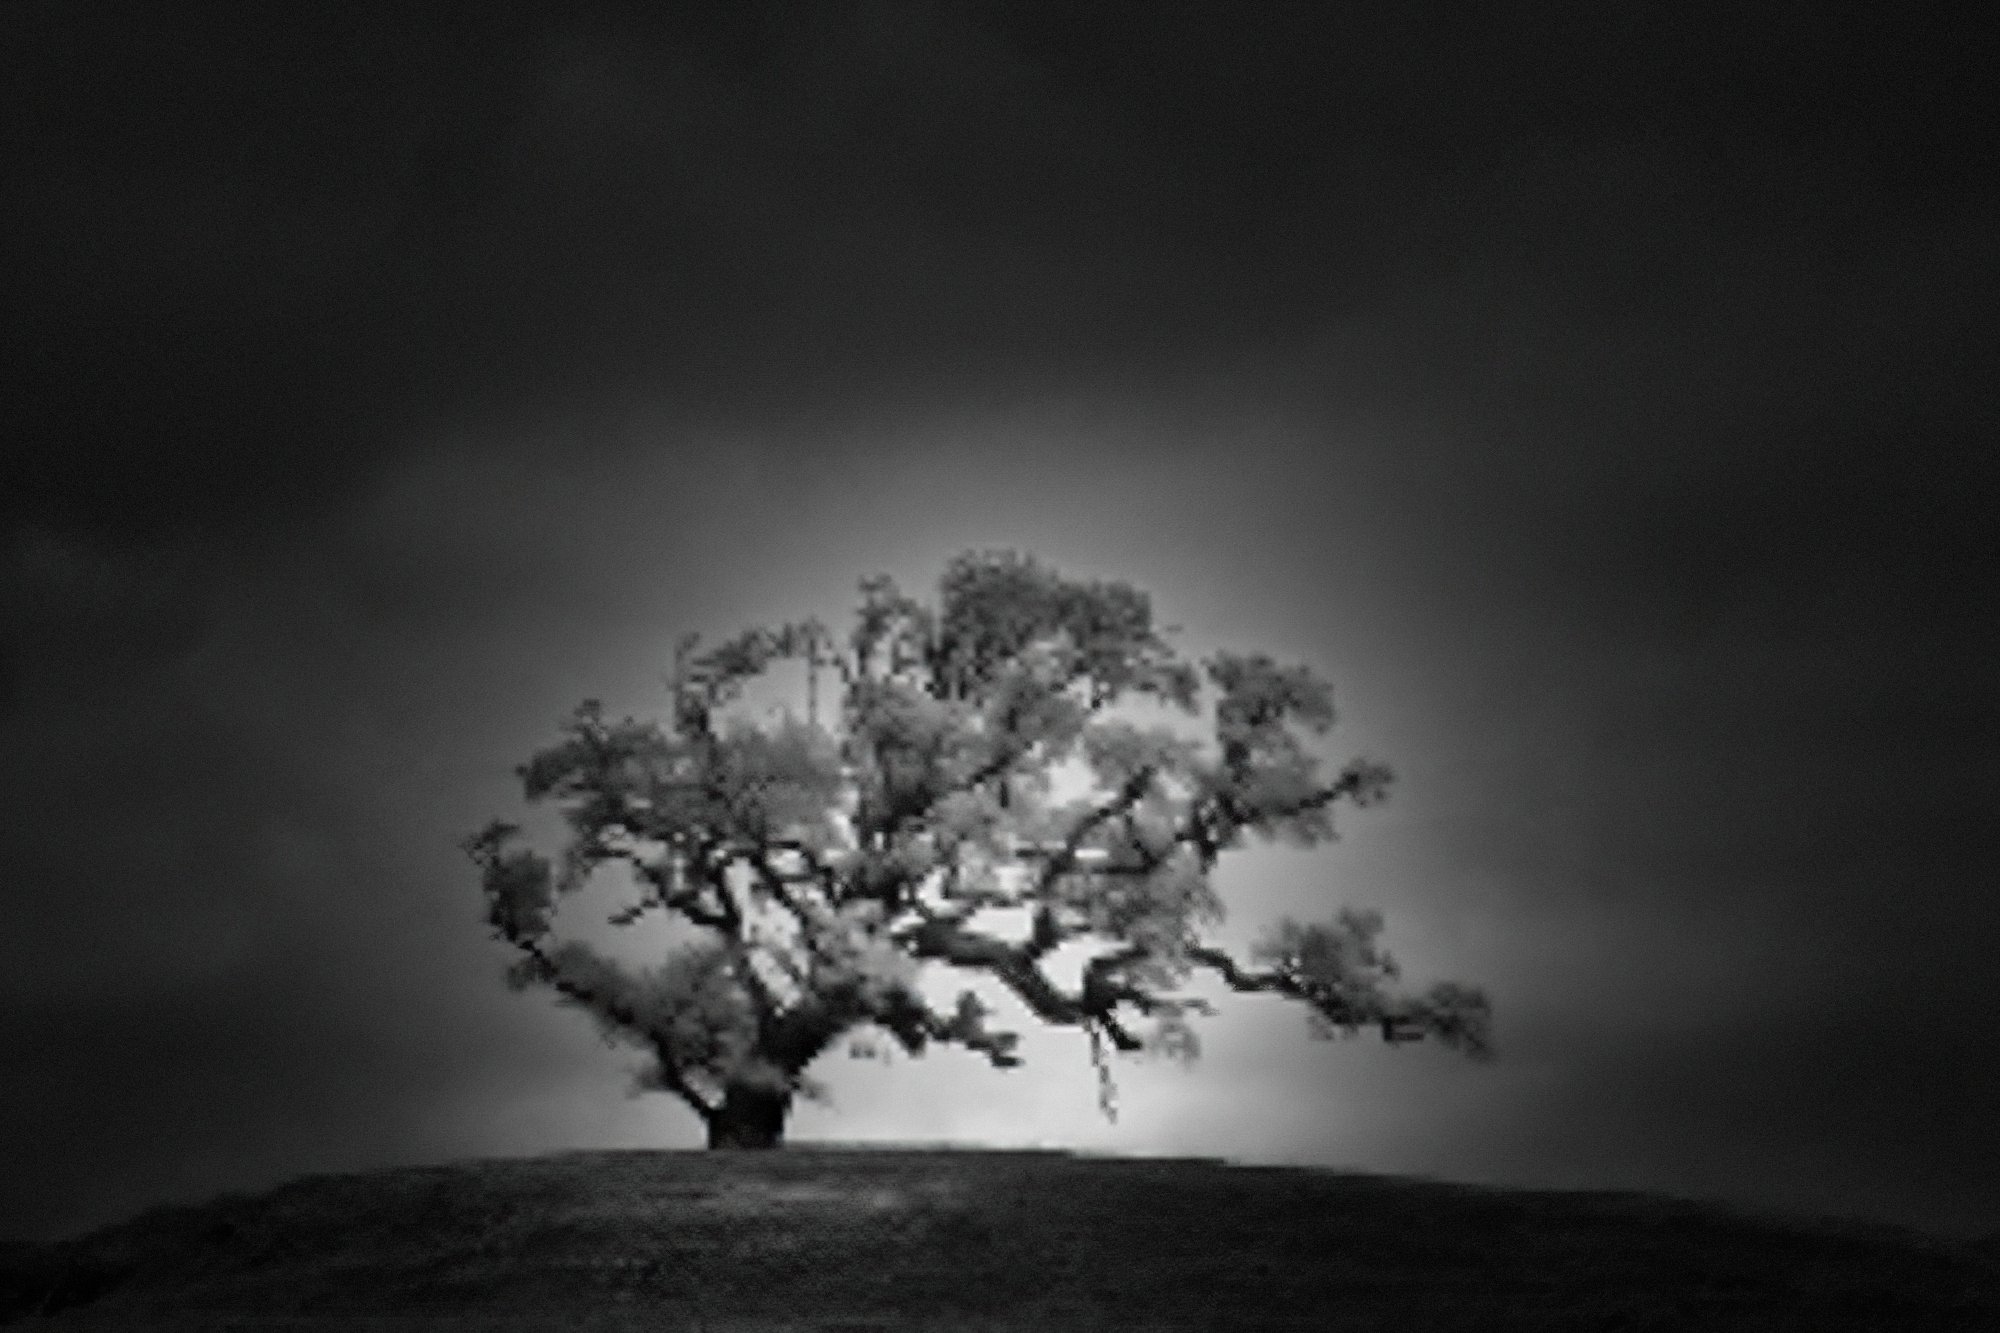 Дерево молчания. Ансель Адамс дерево. Фотограф Nathan Wirth. Дерево чб. Черно белые картинки природы.